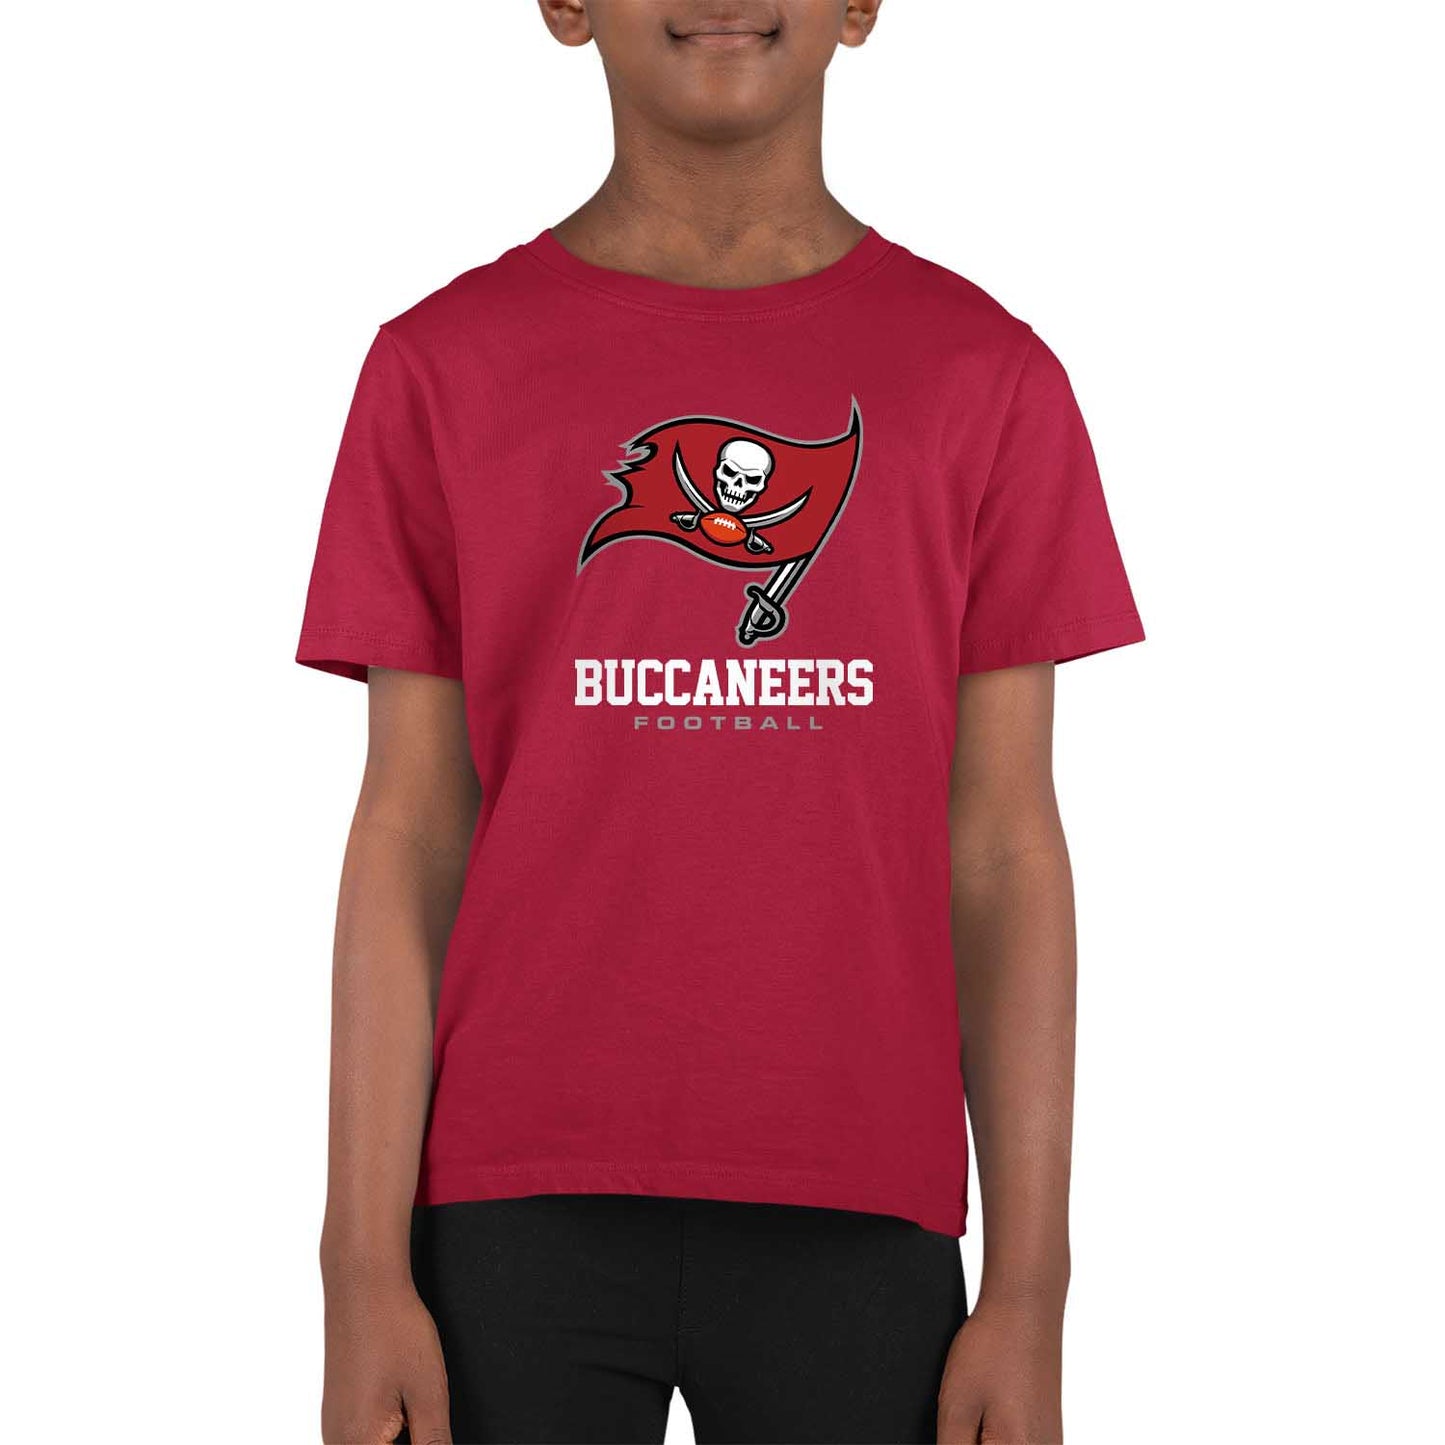 Tampa Bay Buccaneers Youth NFL Ultimate Fan Logo Short Sleeve T-Shirt - Cardinal